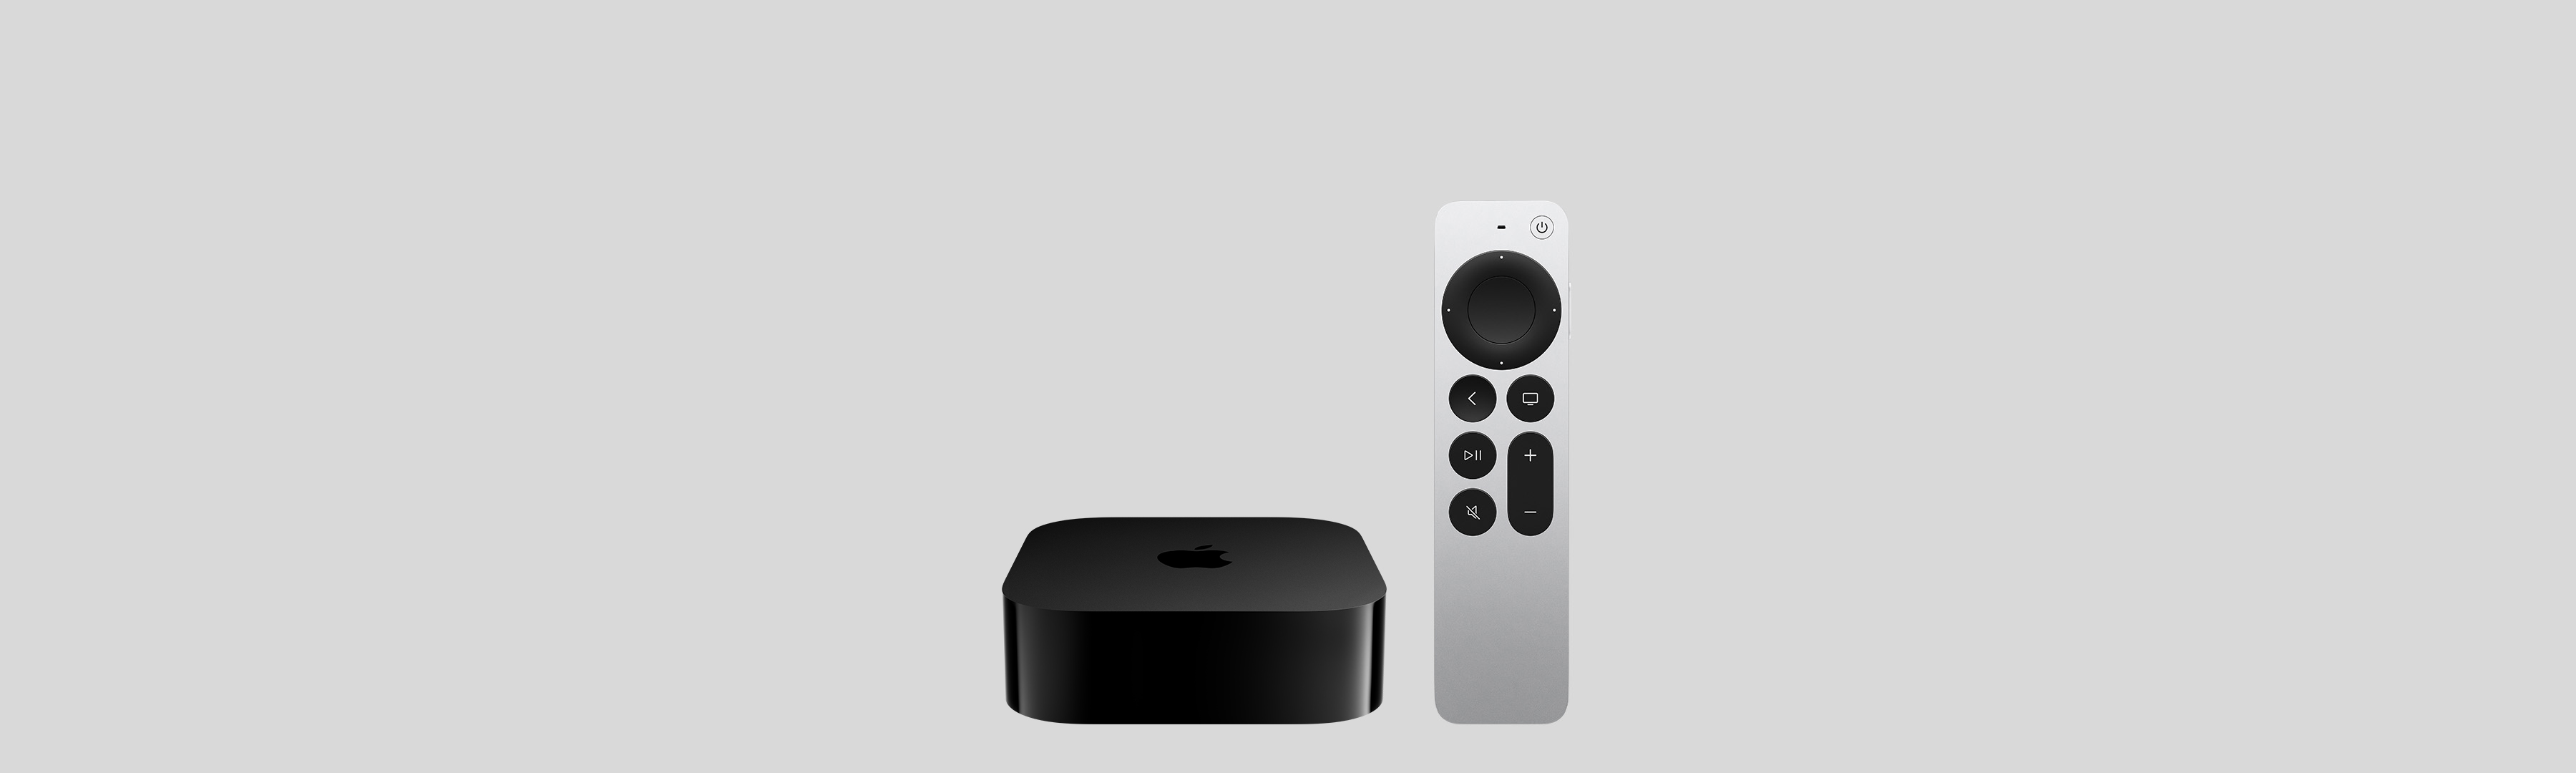 TV - Apple Support